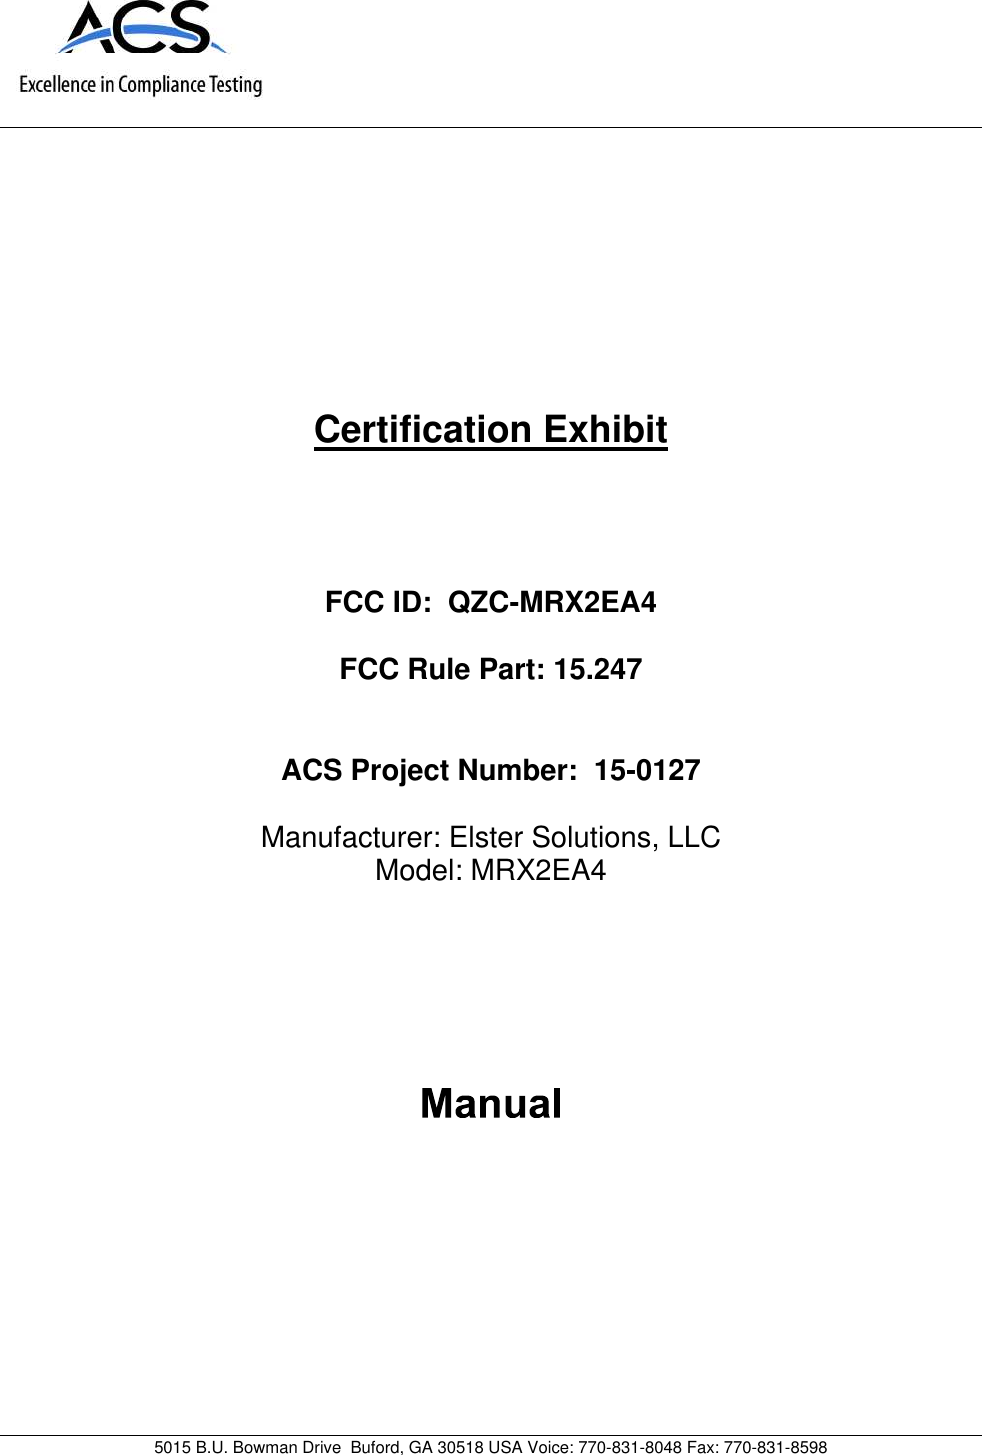 5015 B.U. Bowman Drive Buford, GA 30518 USA Voice: 770-831-8048 Fax: 770-831-8598Certification ExhibitFCC ID: QZC-MRX2EA4FCC Rule Part: 15.247ACS Project Number: 15-0127Manufacturer: Elster Solutions, LLCModel: MRX2EA4